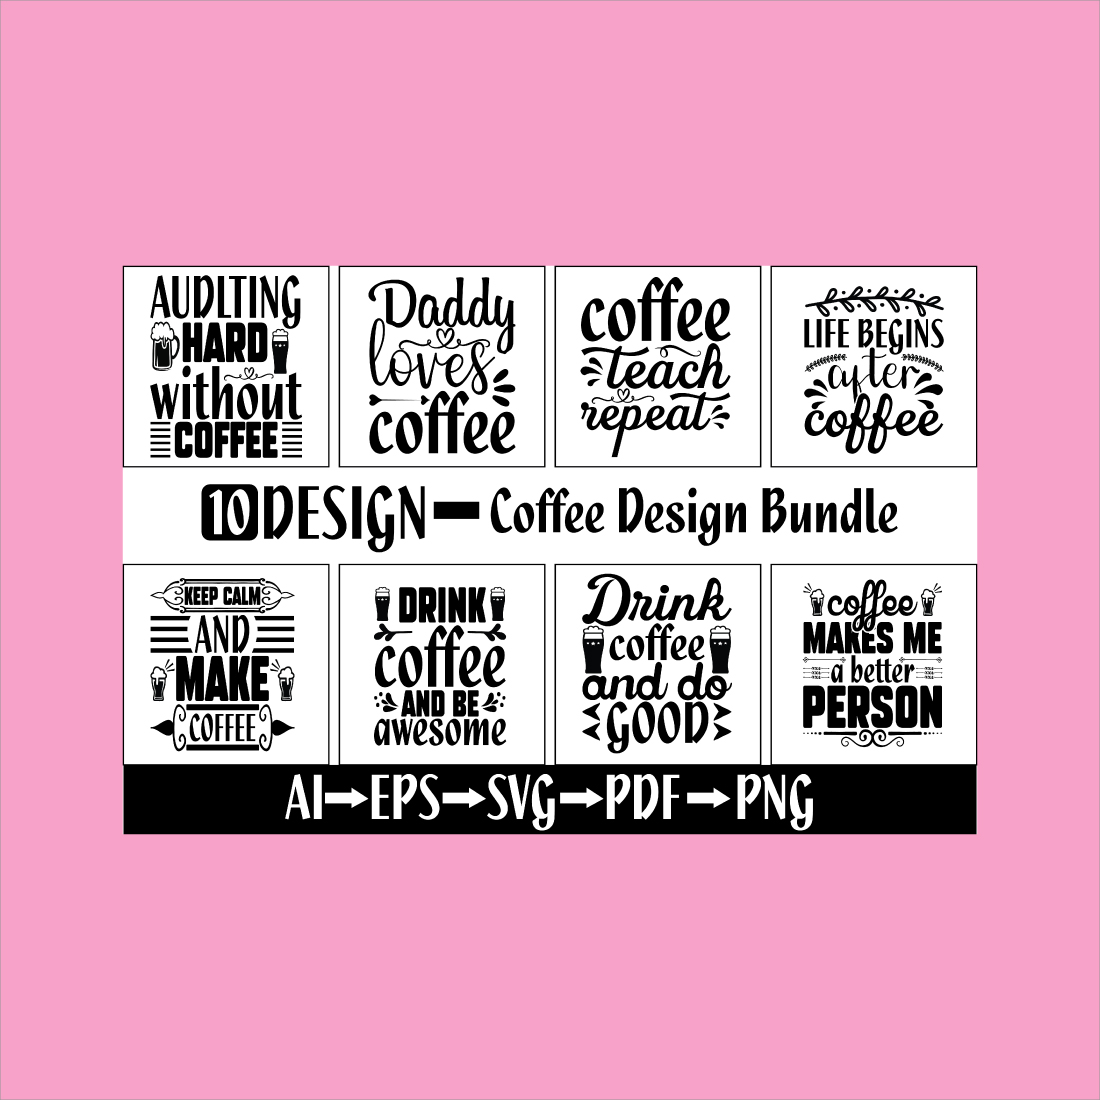 Coffee Design Bundle main cover